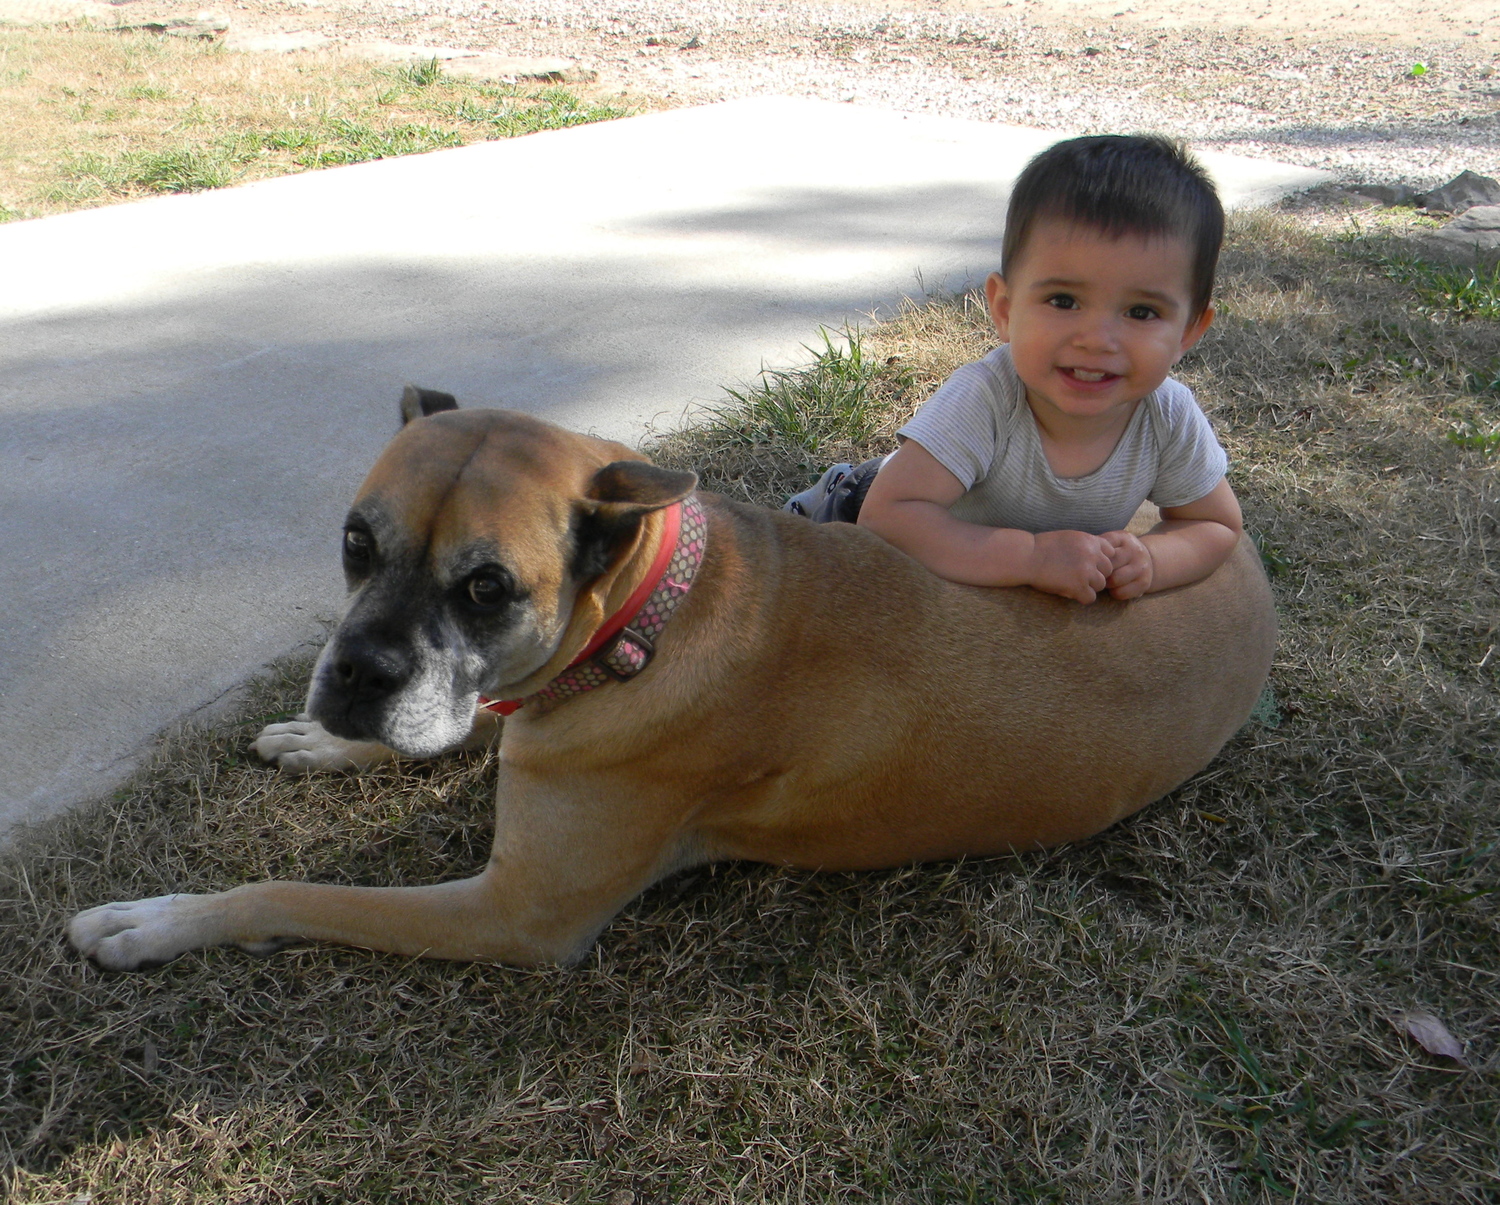 Our adventurous boy with his favorite neighbor dog Daisy